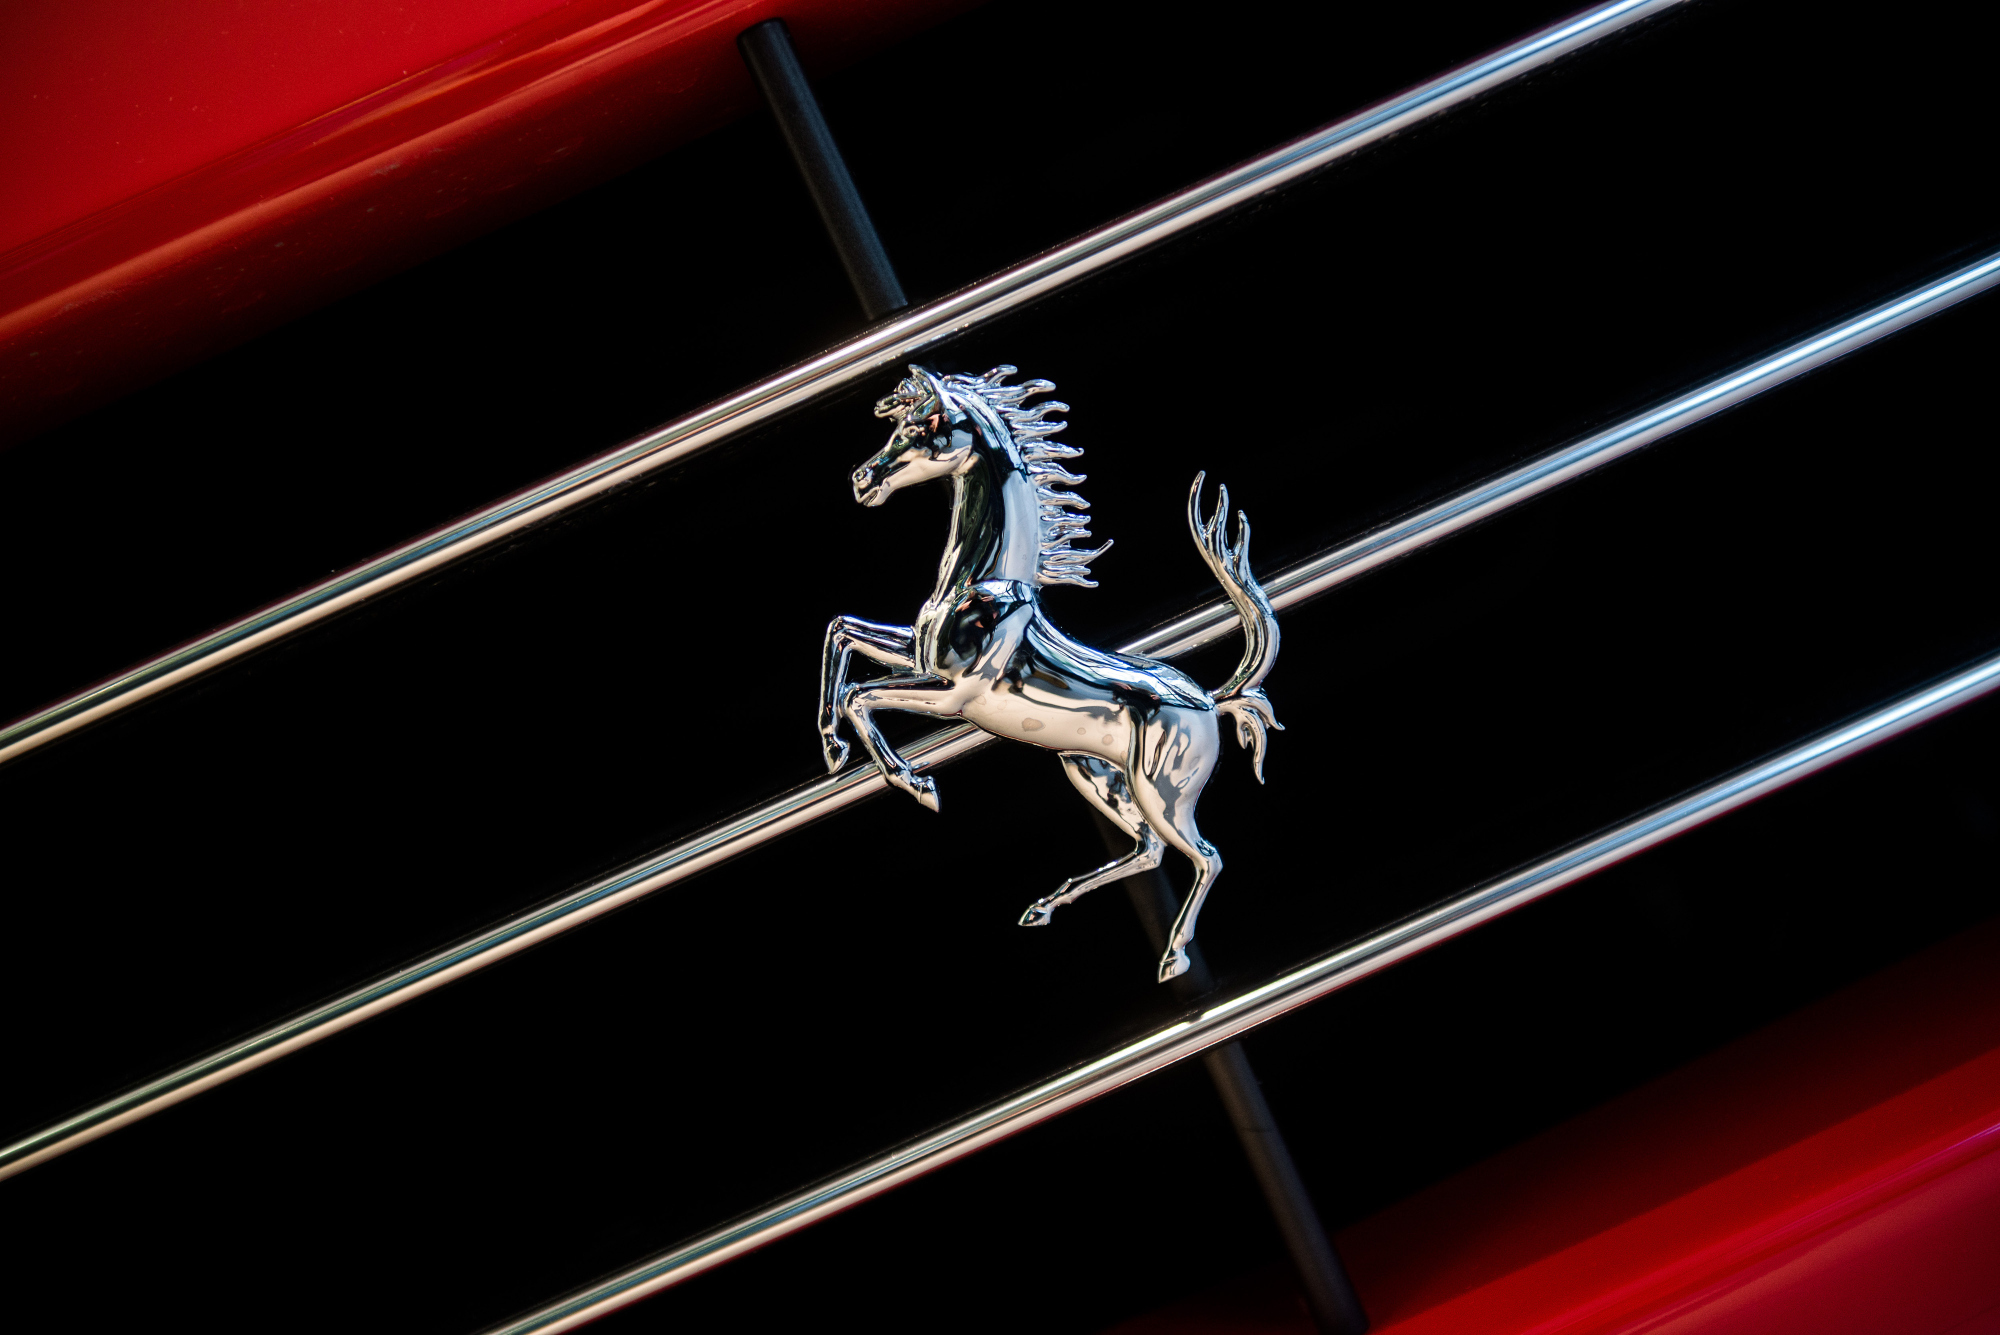 Ferrari Ahead of Schedule in Tuning EV Parts - Bloomberg